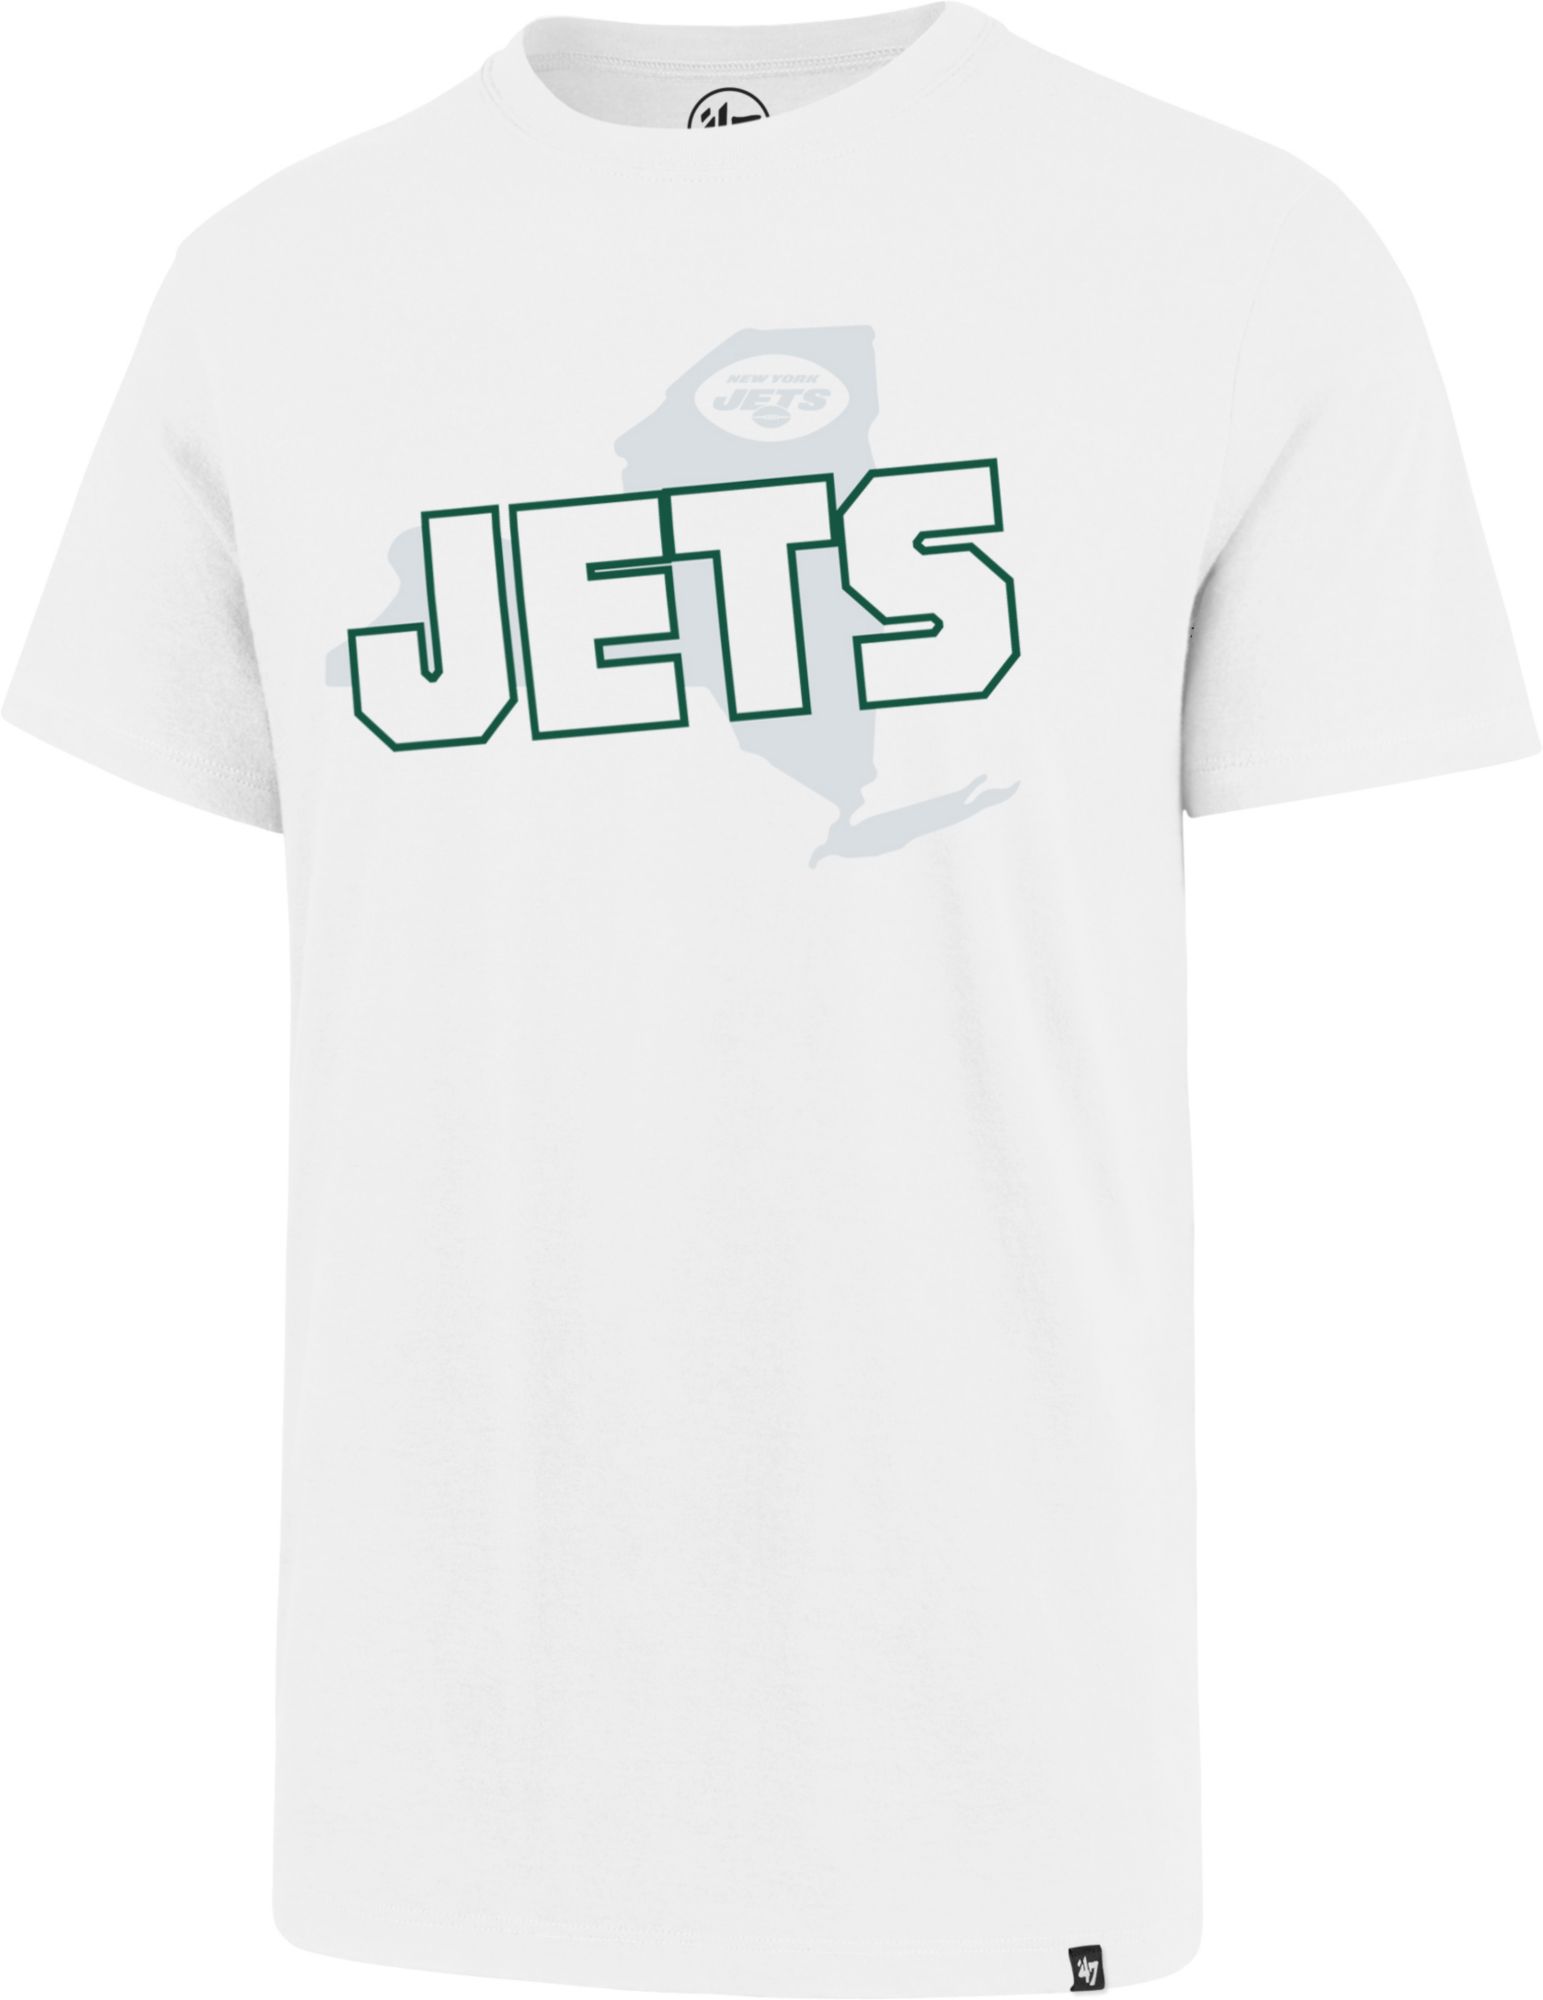 York Jets Super Rival White T-Shirt 